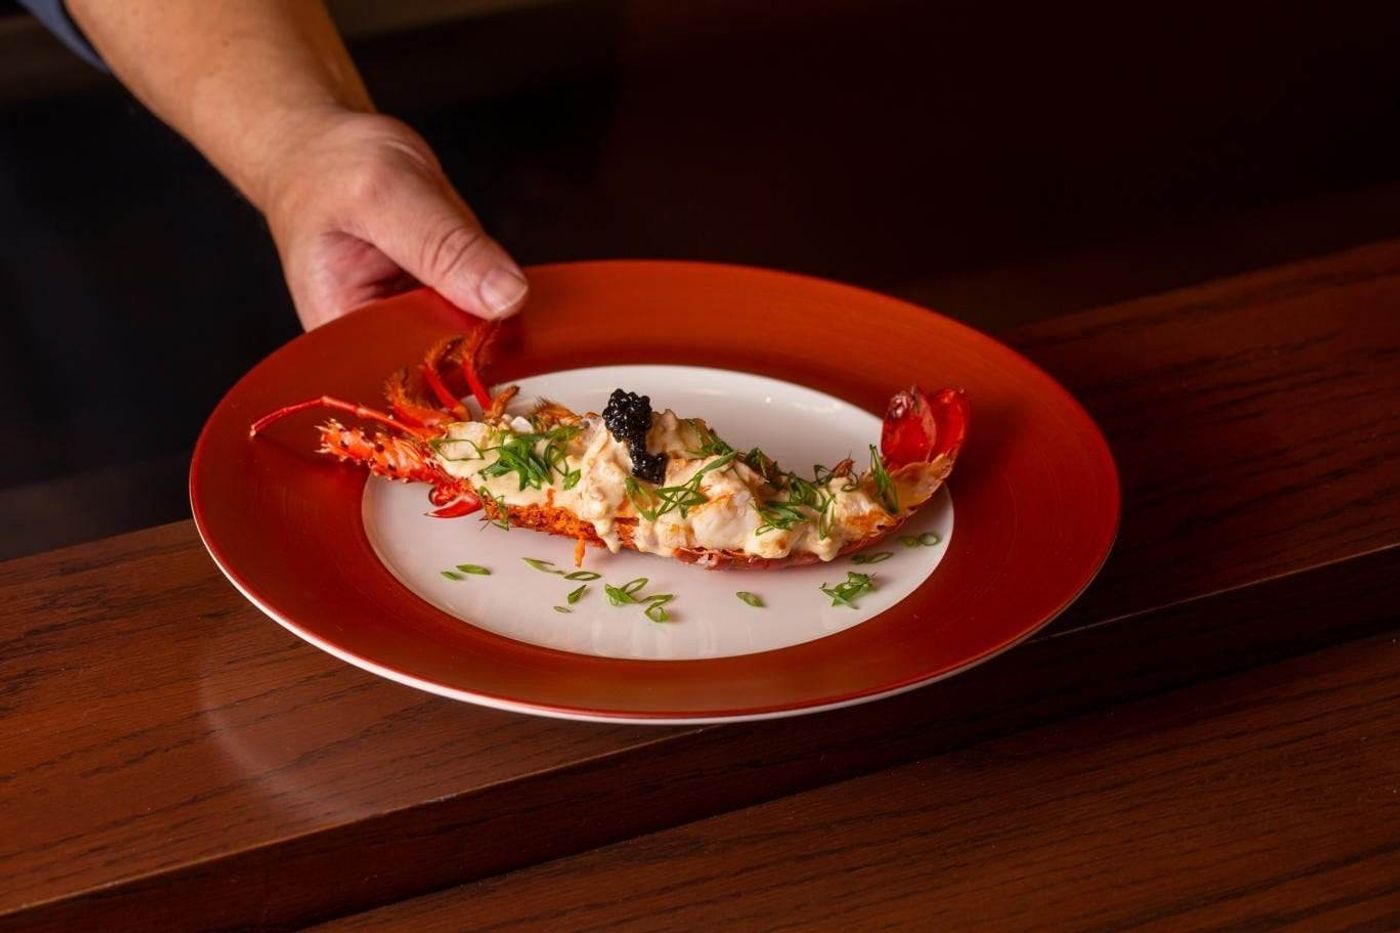 A lobster dish at Hibana by Koki. Credit: Photos courtesy of the restaurants